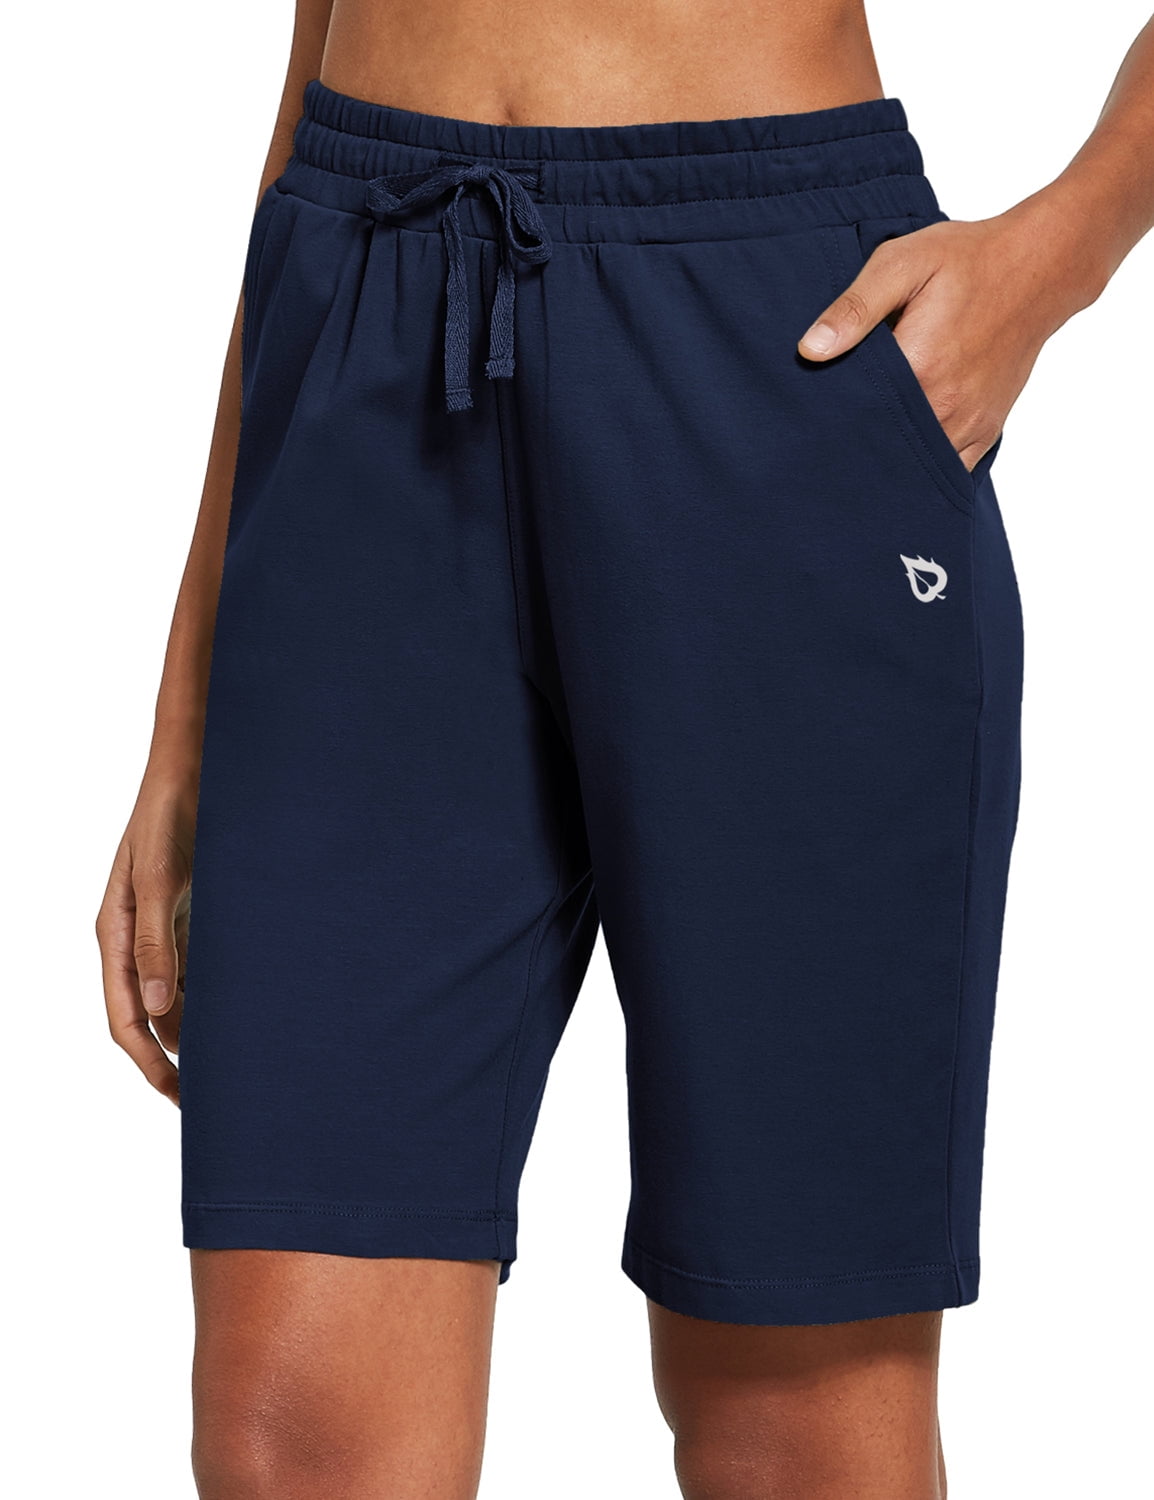 BALEAF Womens 5 Casual Jersey Cotton Shorts Lounge Yoga Pajama Walking Shorts with Pockets Activewear 